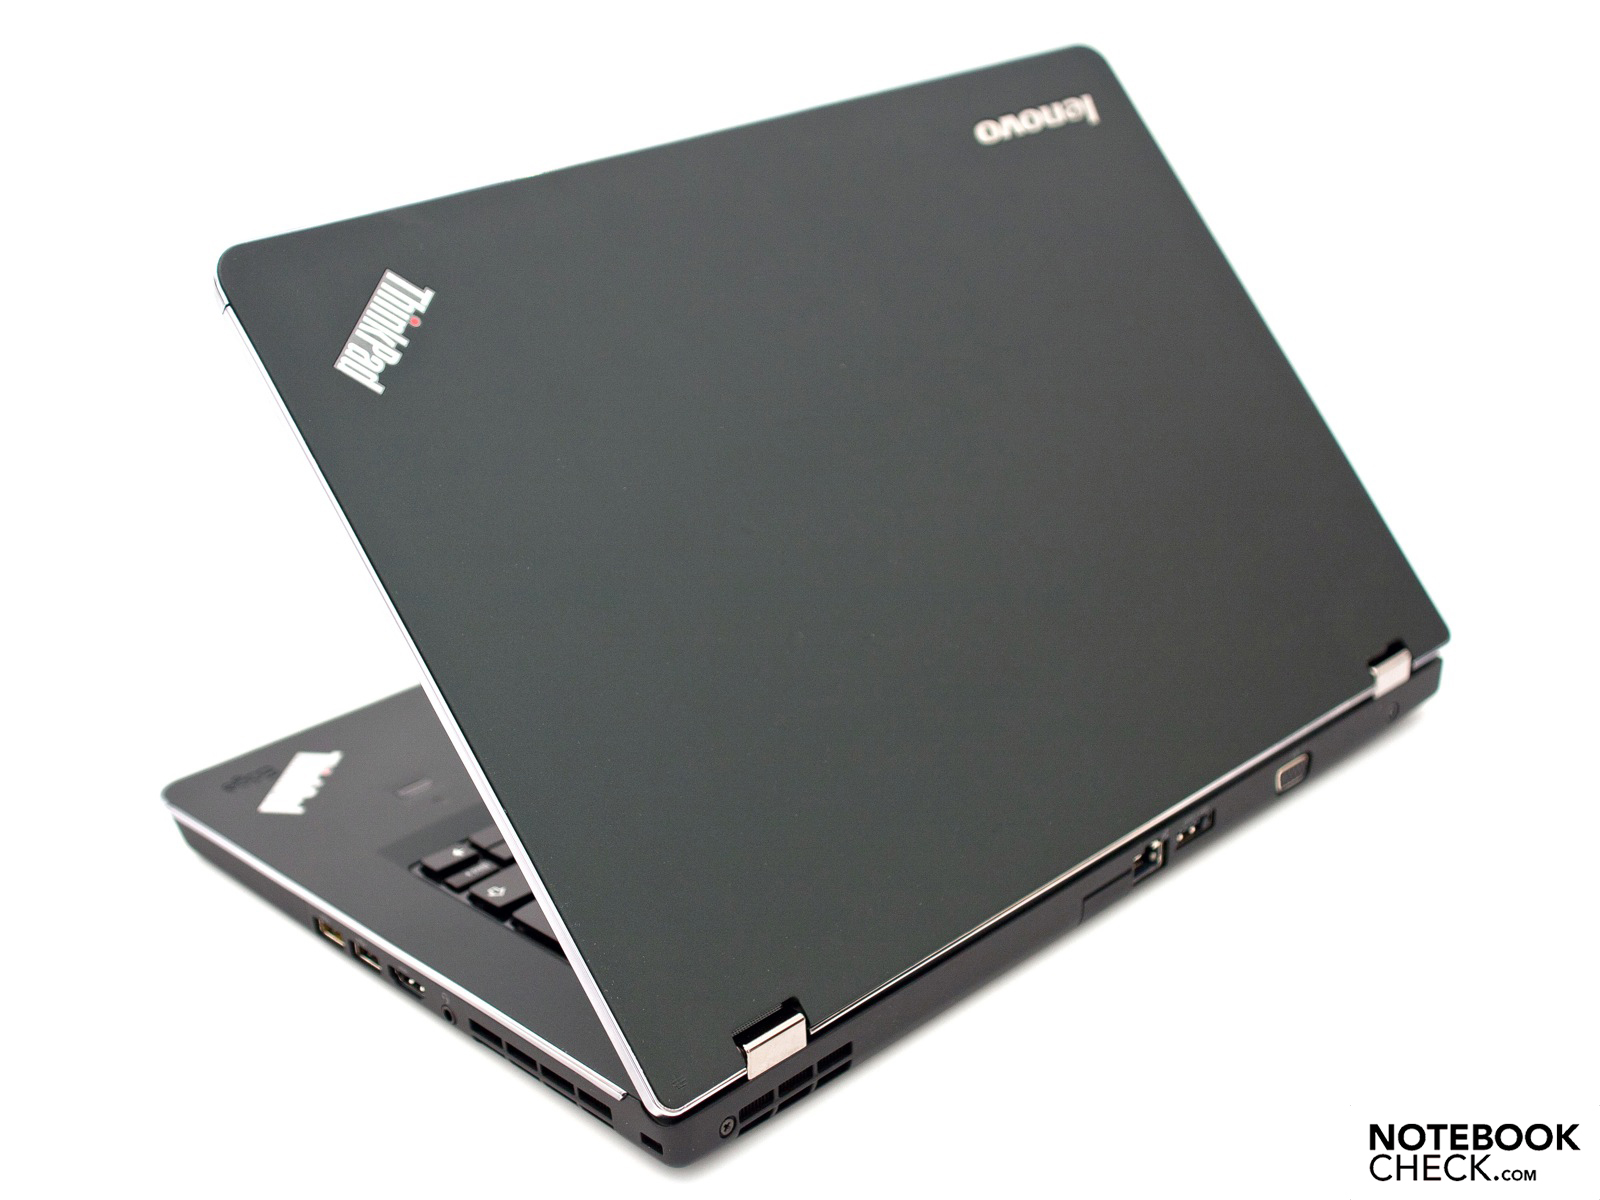 Review Lenovo ThinkPad Edge E420s Notebook - NotebookCheck.net Reviews